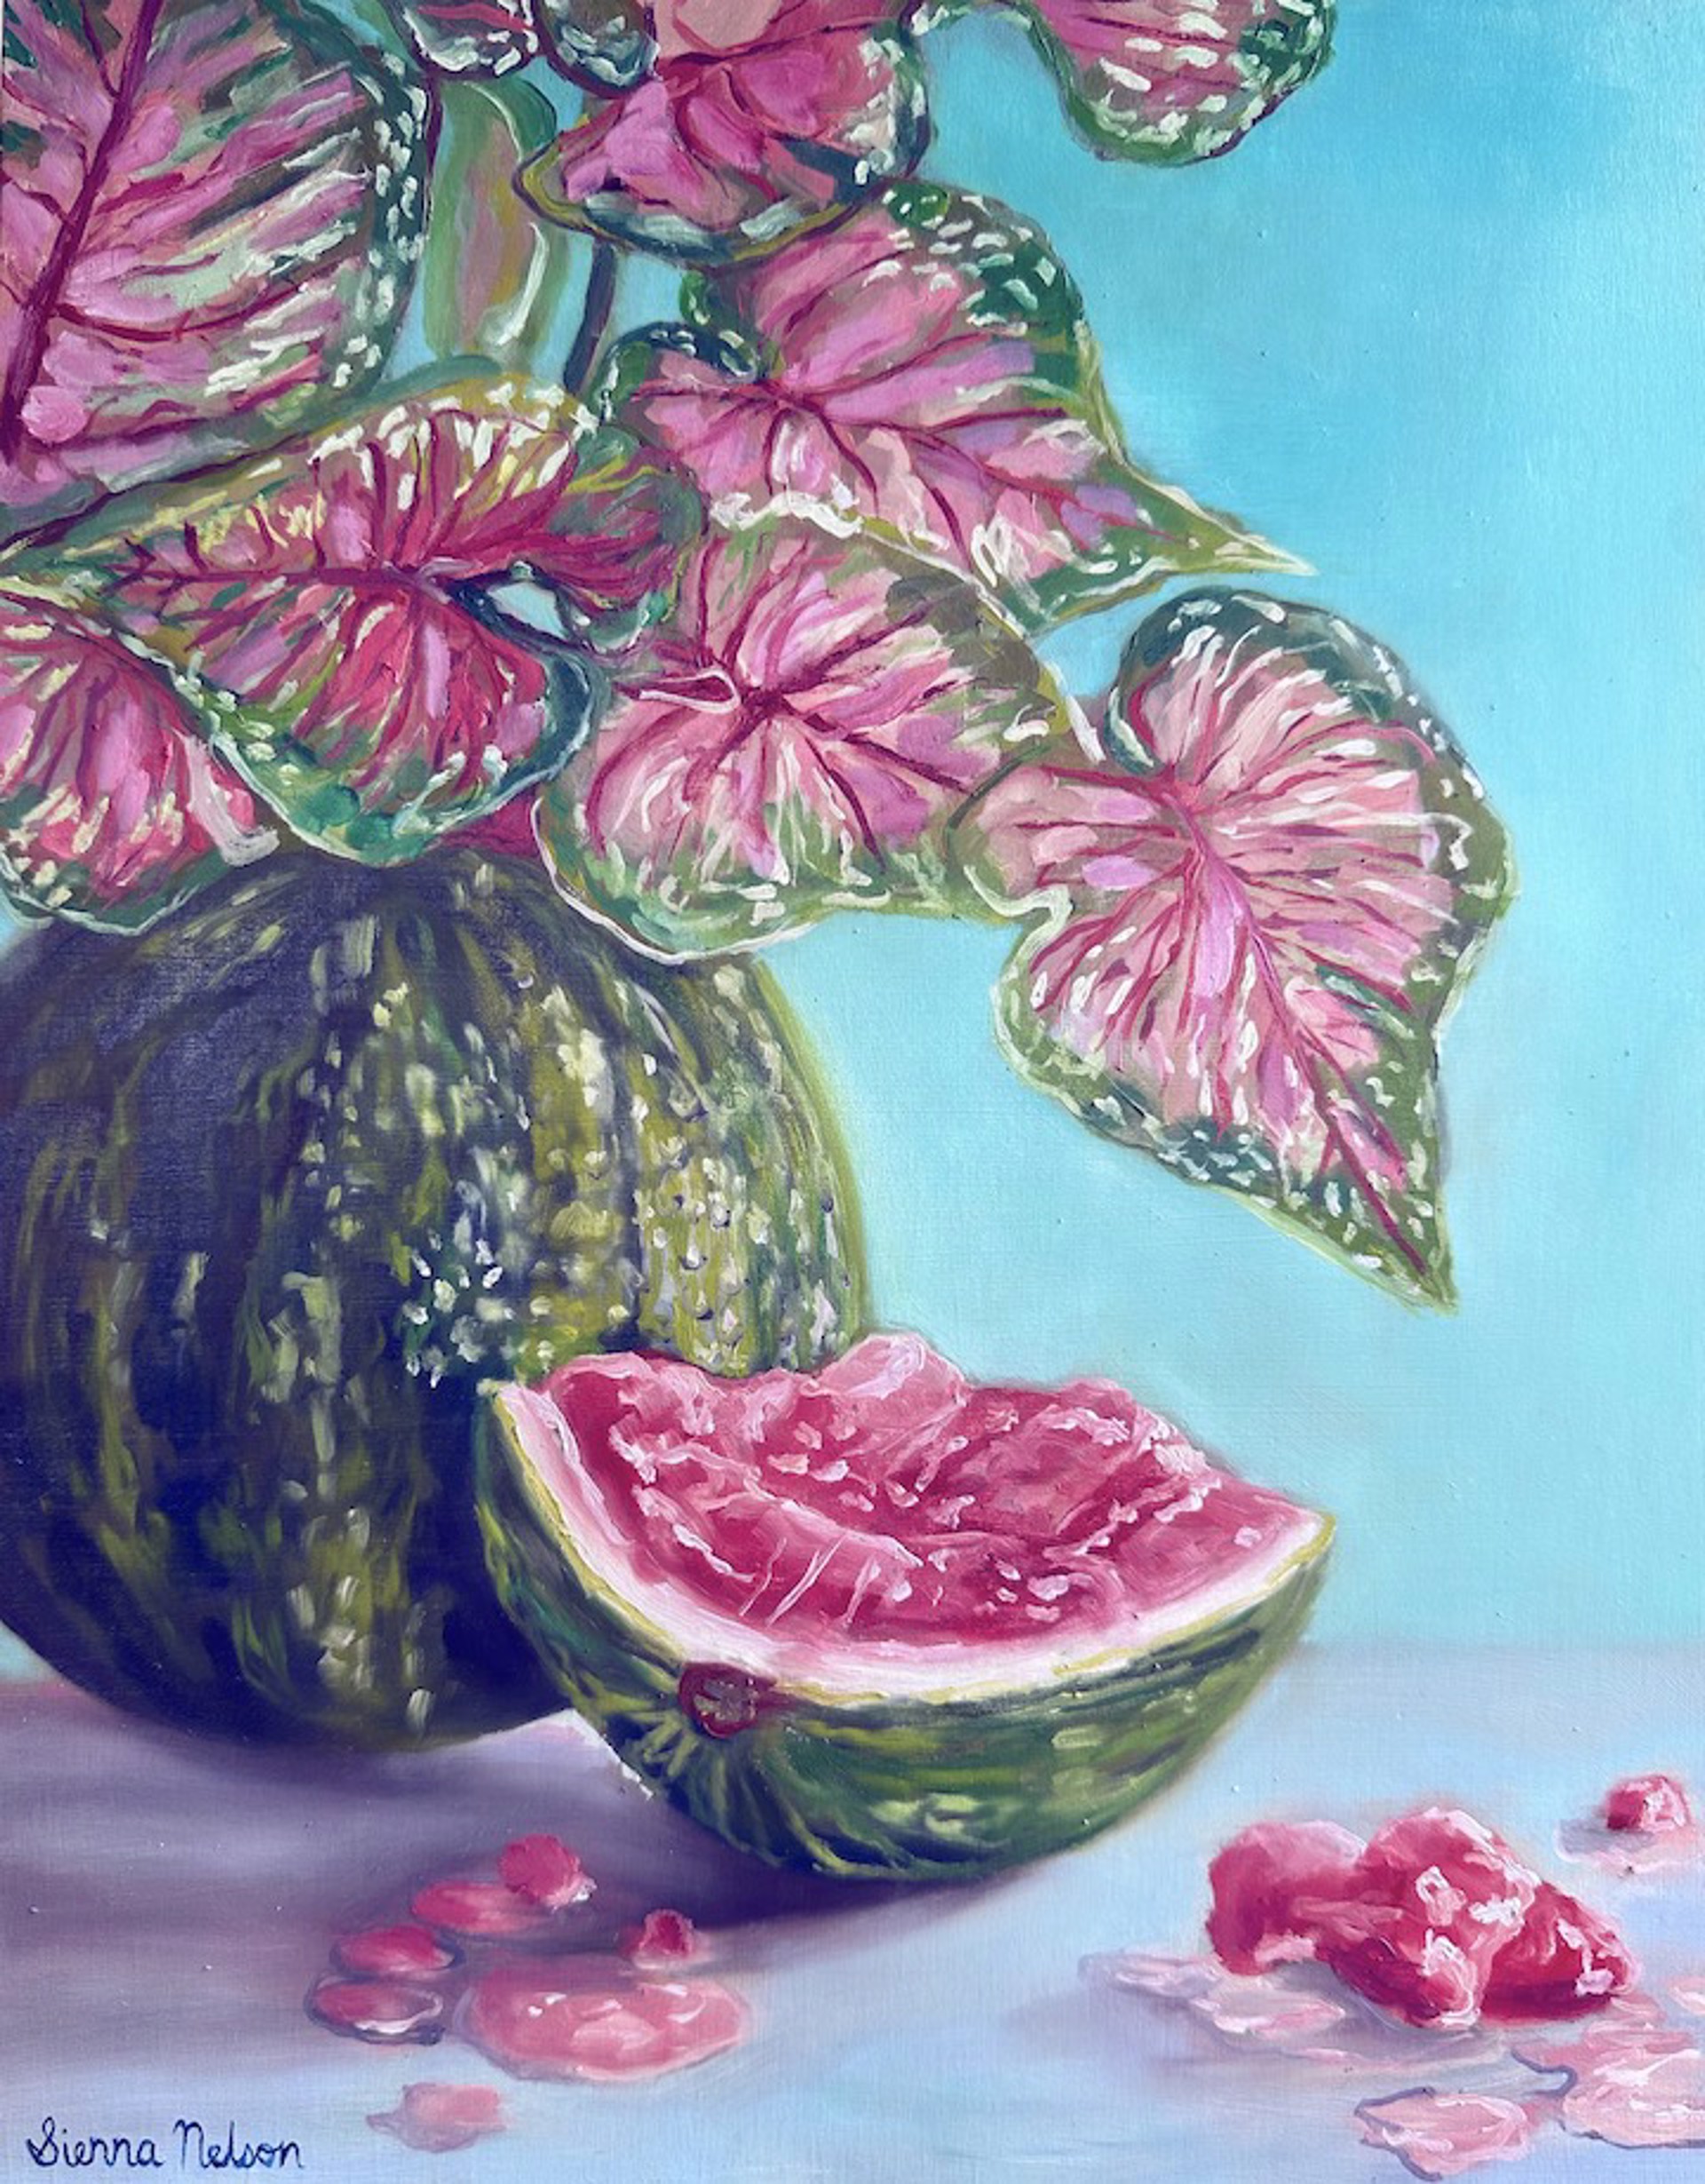 Watermelon Still Life by Sienna Nelson